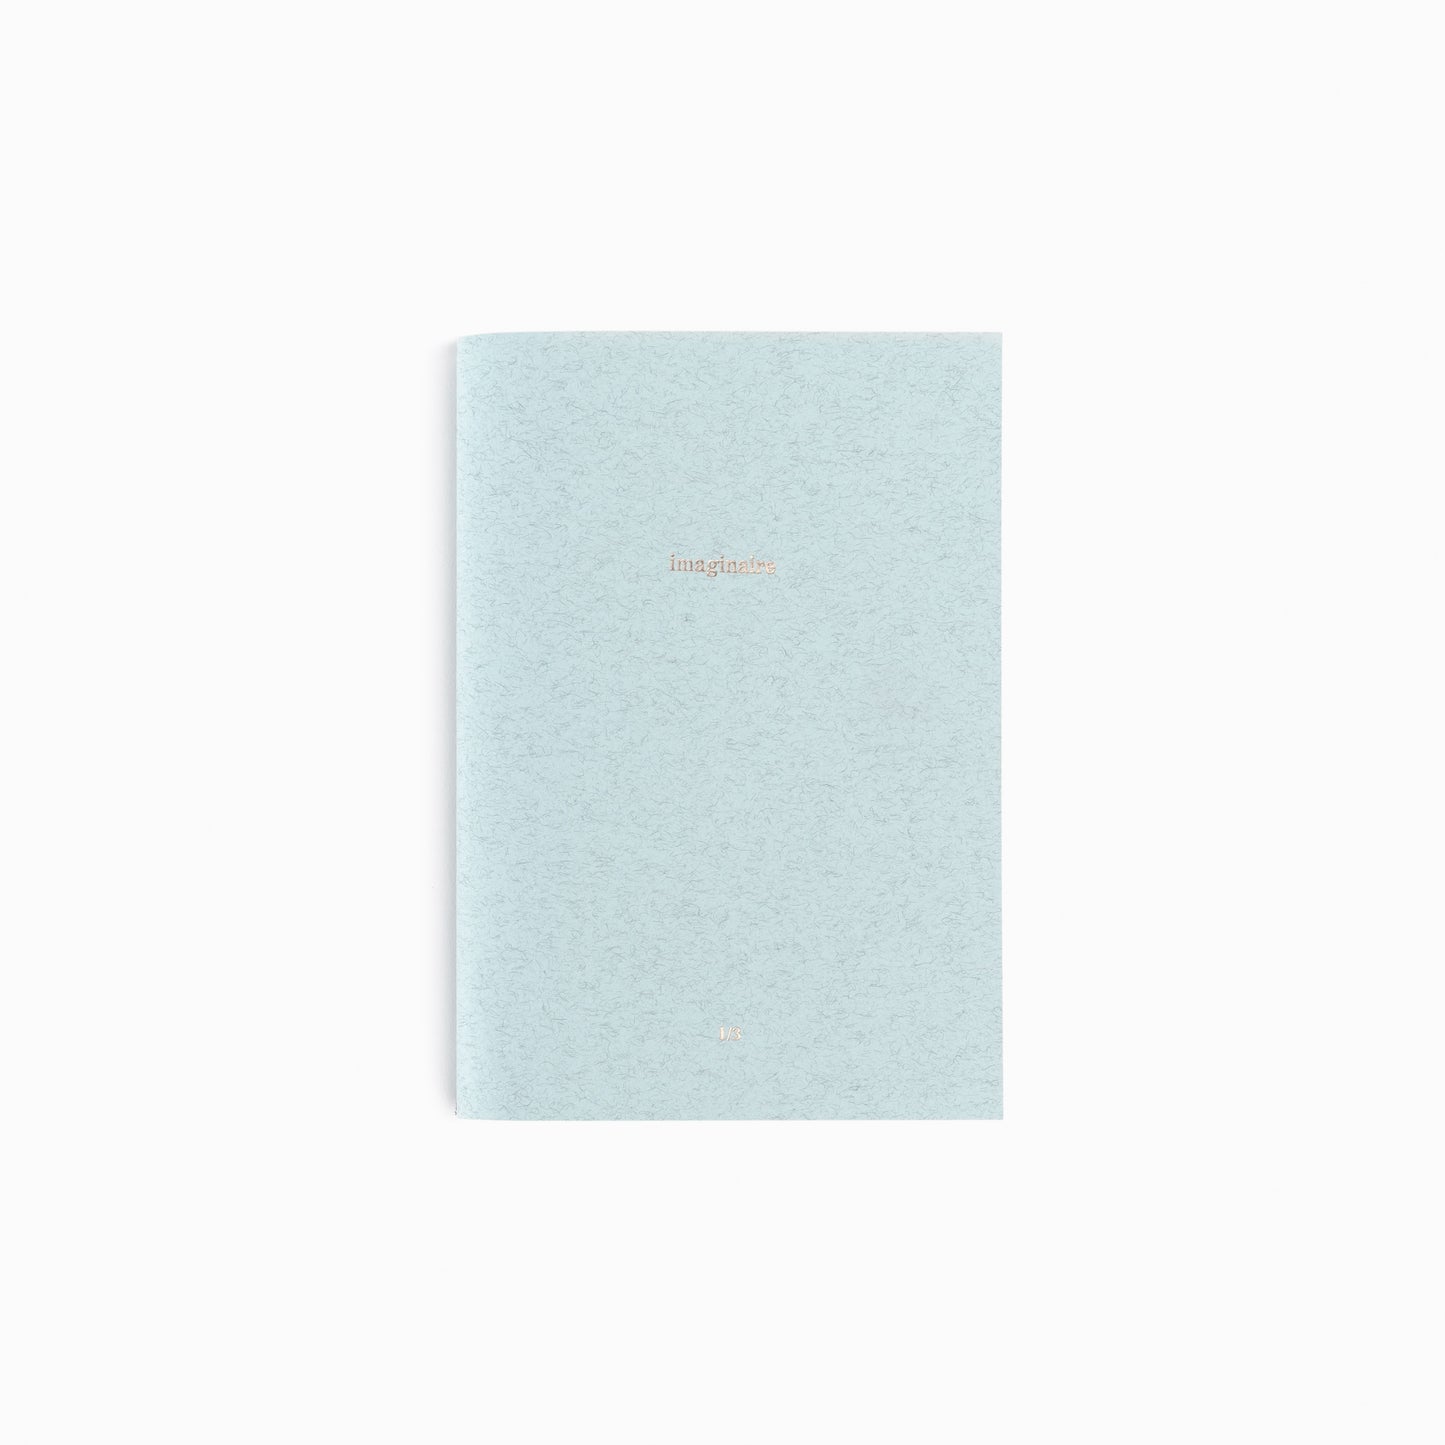 imaginaire notebook | A5 | Plain